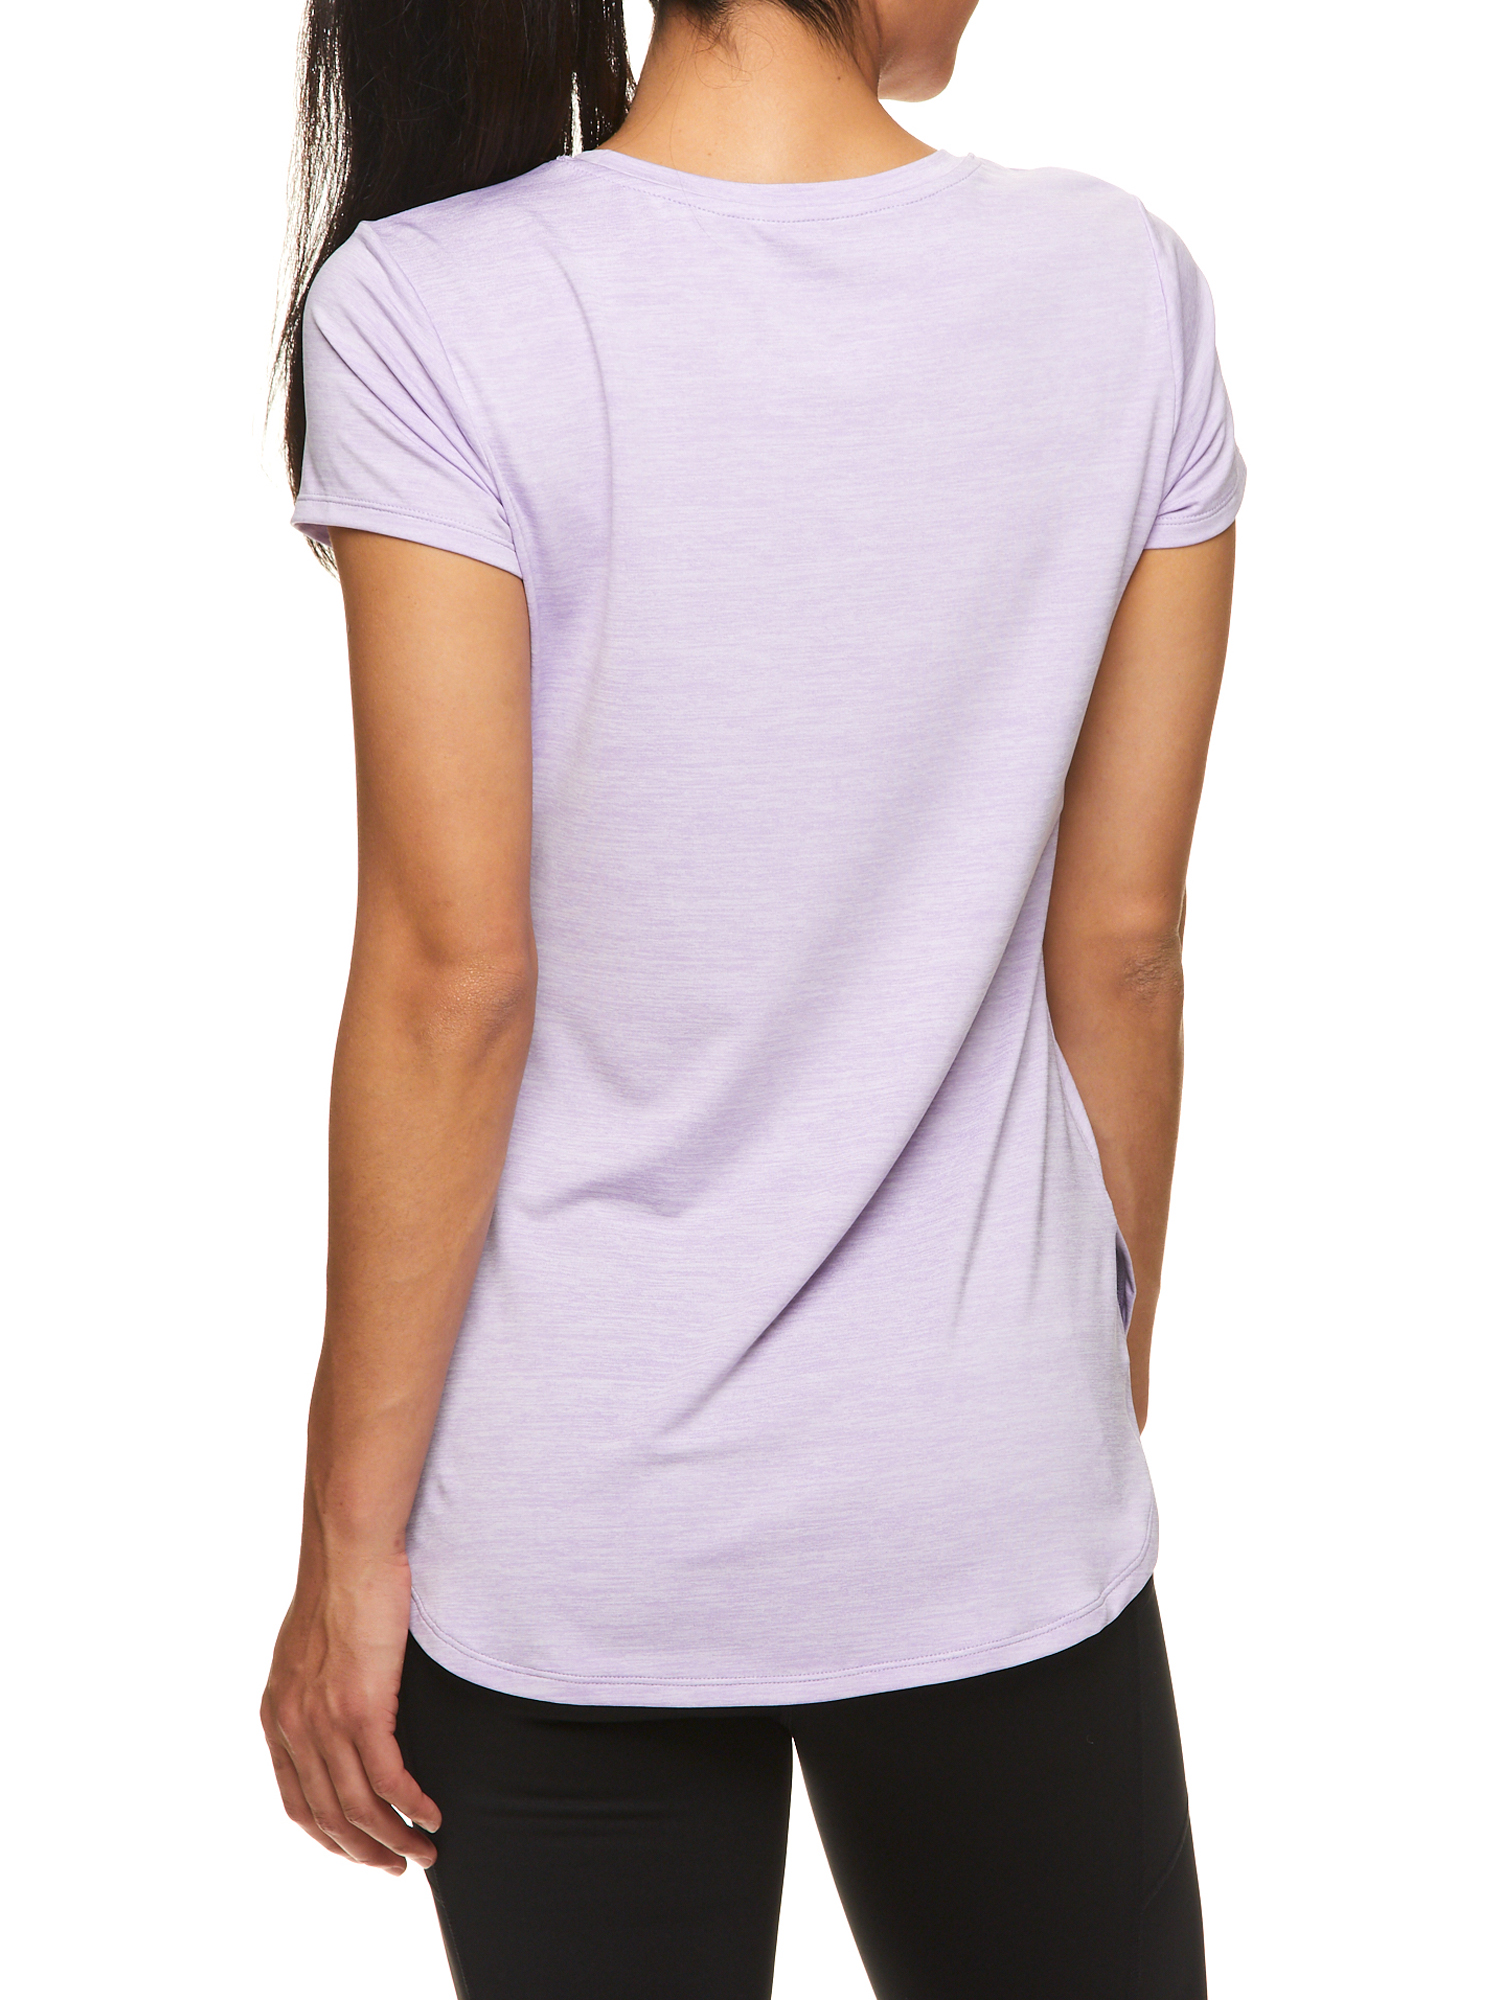 Reebok Women's Graphic Short Sleeve T-Shirt - image 2 of 4